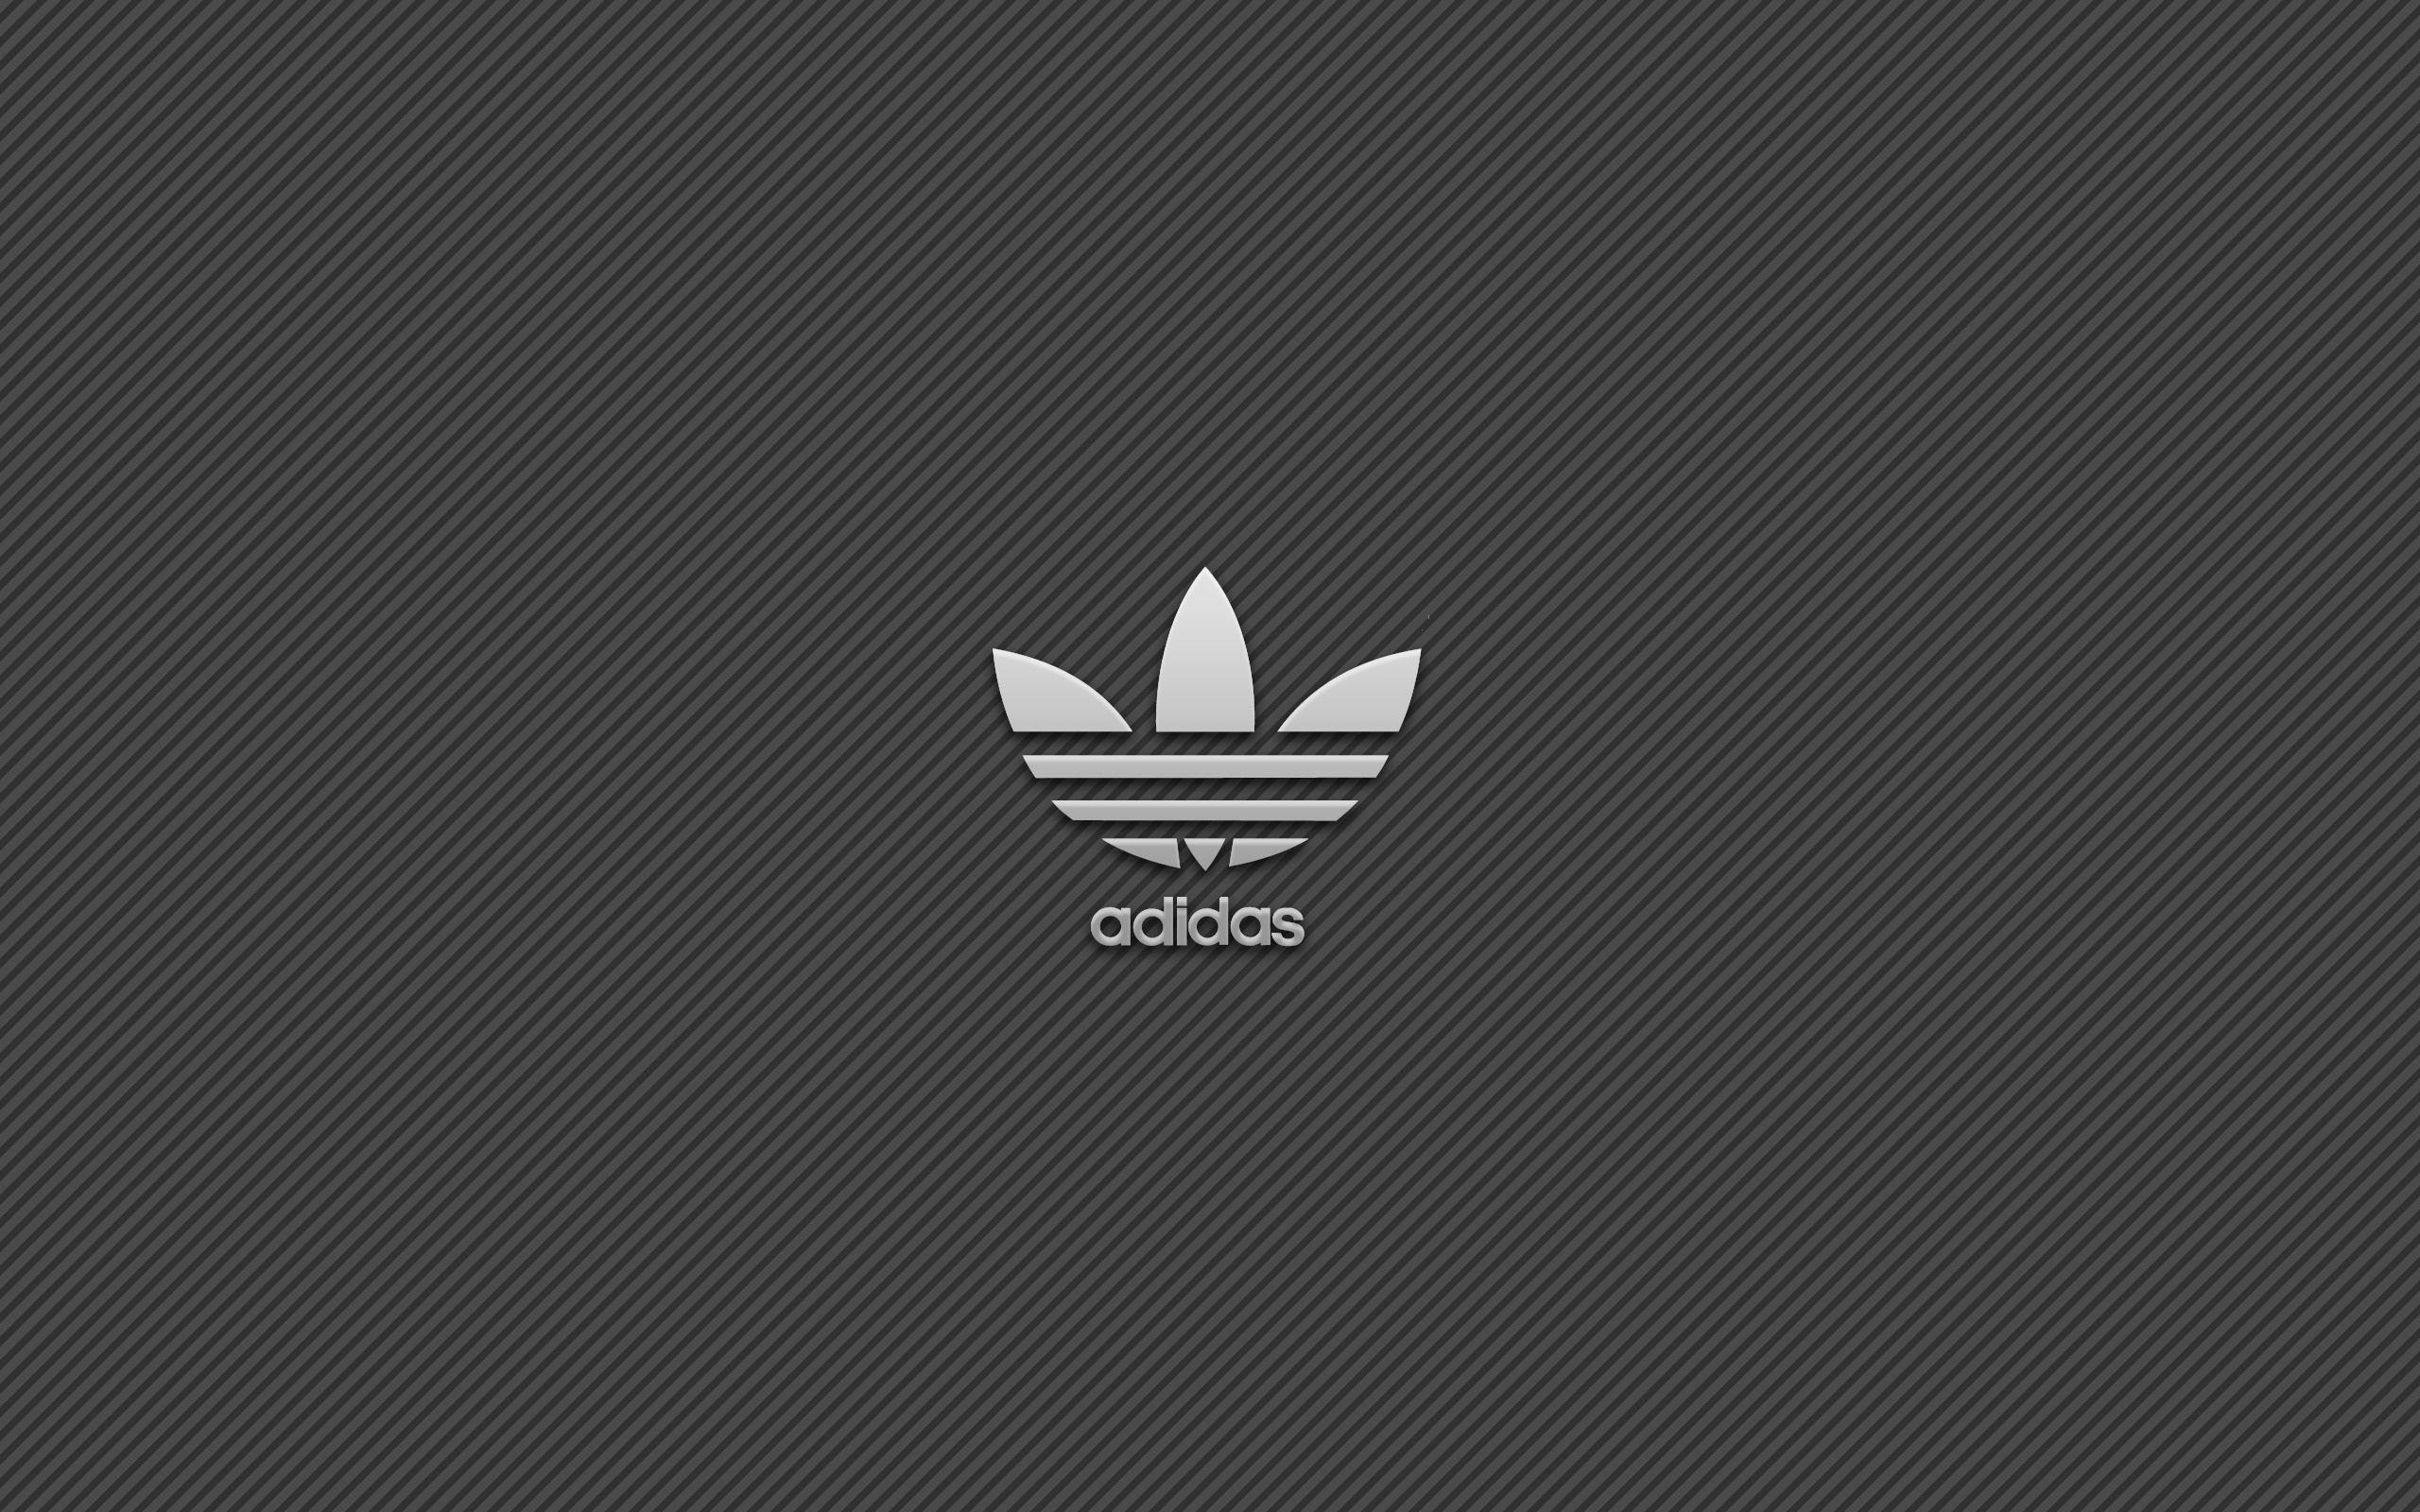 adidas hd wallpaper download